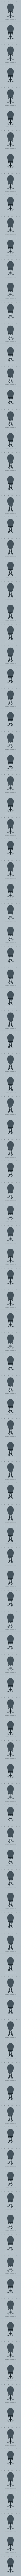 Fabergé Egg: Monochrome (LCD)